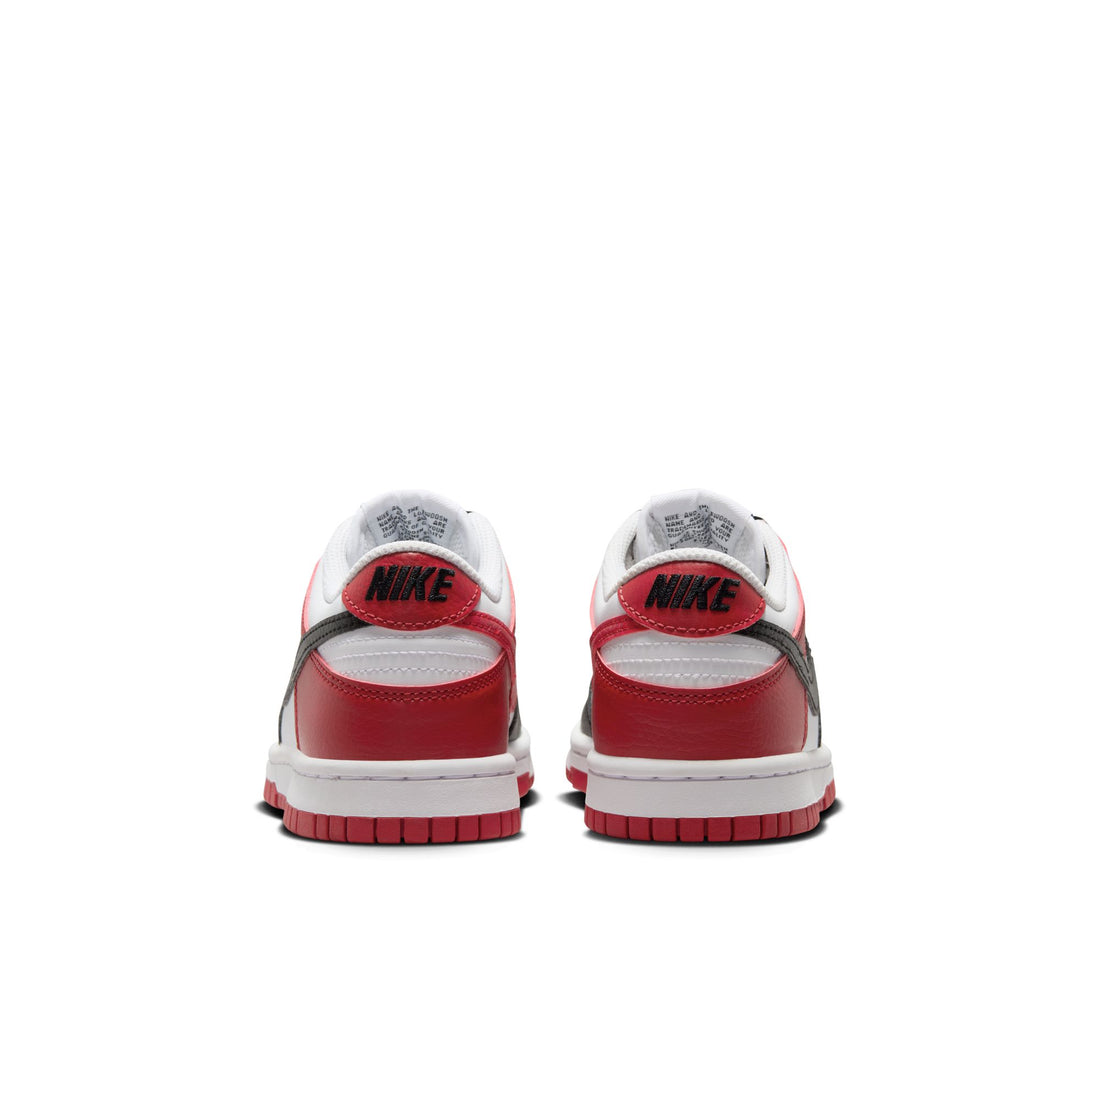 Nike Dunk Low GS (Gym Red/Black/White)